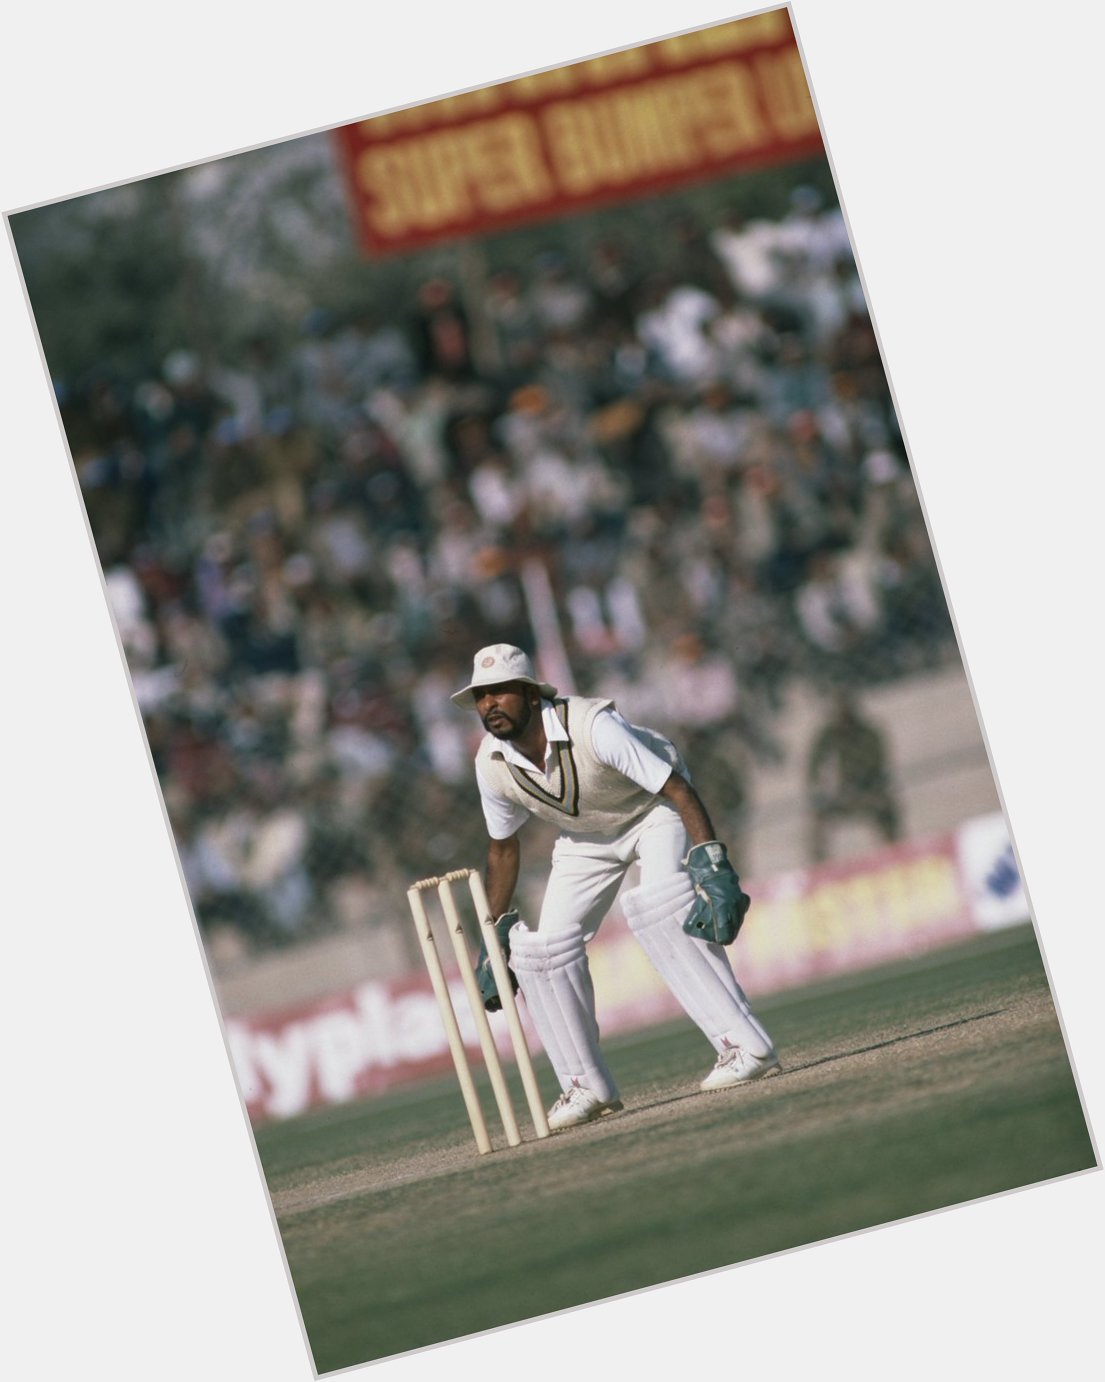 Happy Birthday to India\s 1983 winning wicket-keeper, Syed Kirmani! 